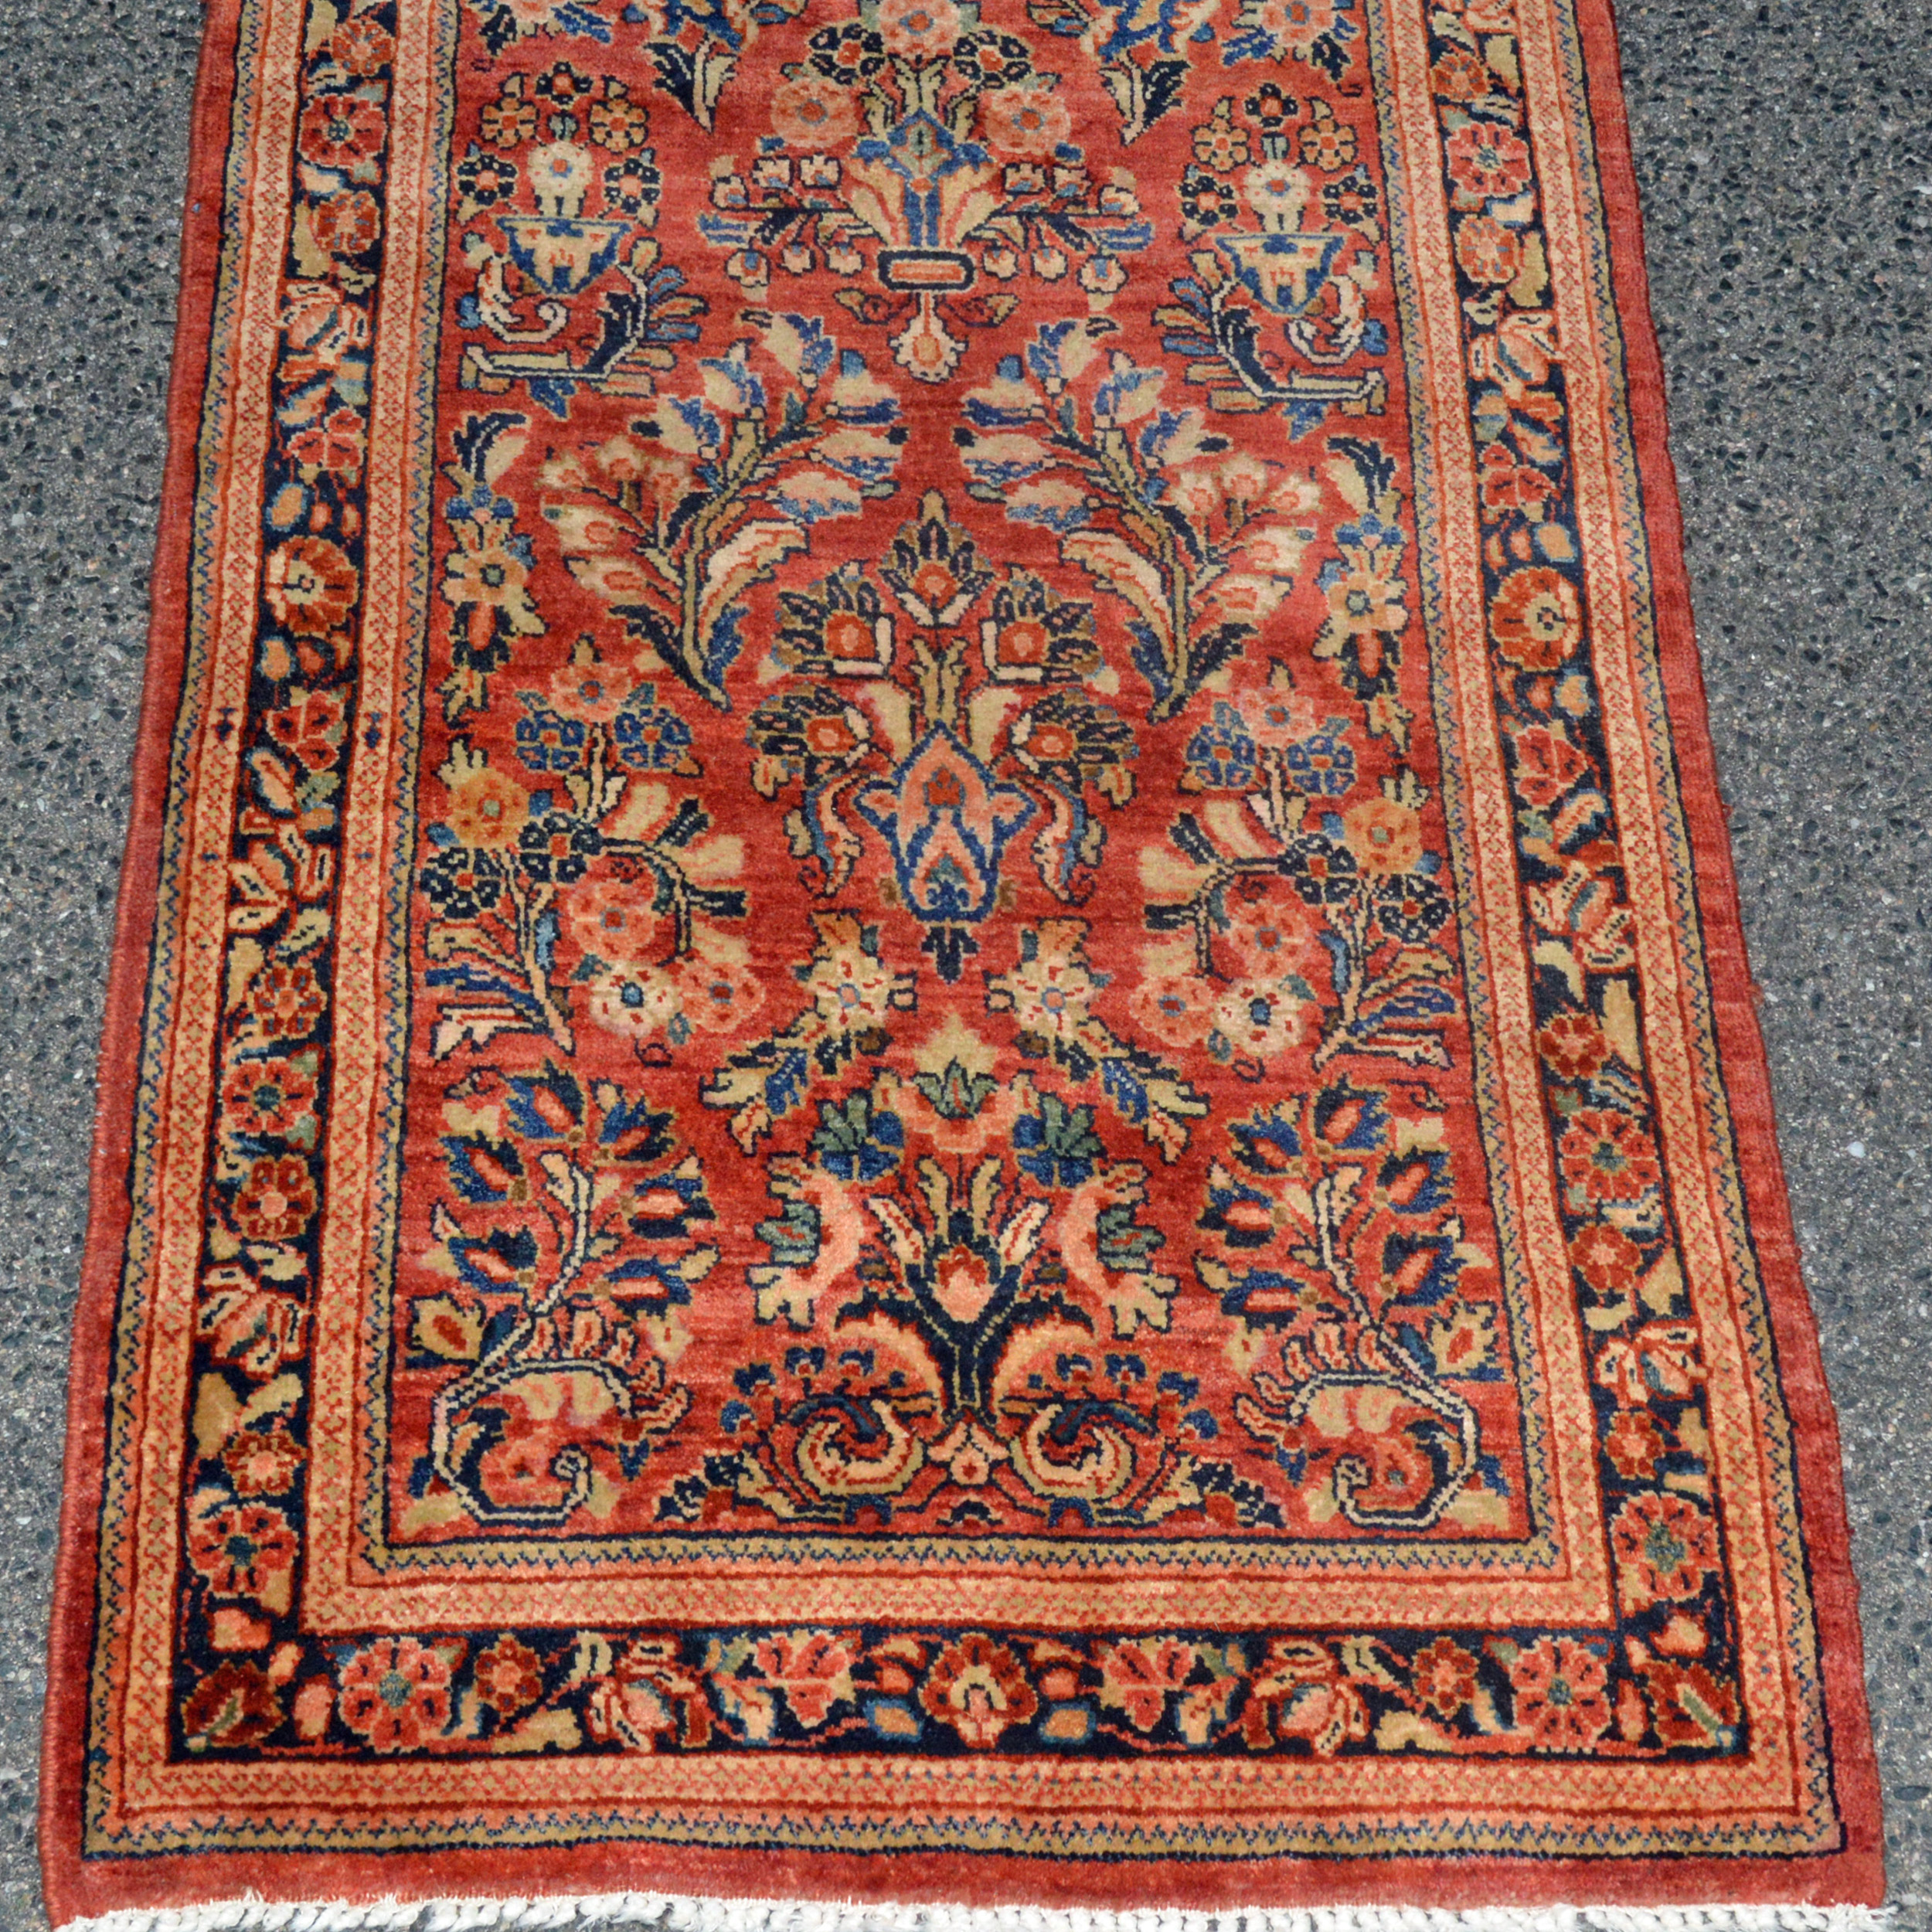 Vintage Persian Sarouk runner, Douglas Stock Gallery, antique, vintage and new Oriental rugs Boston,MA area